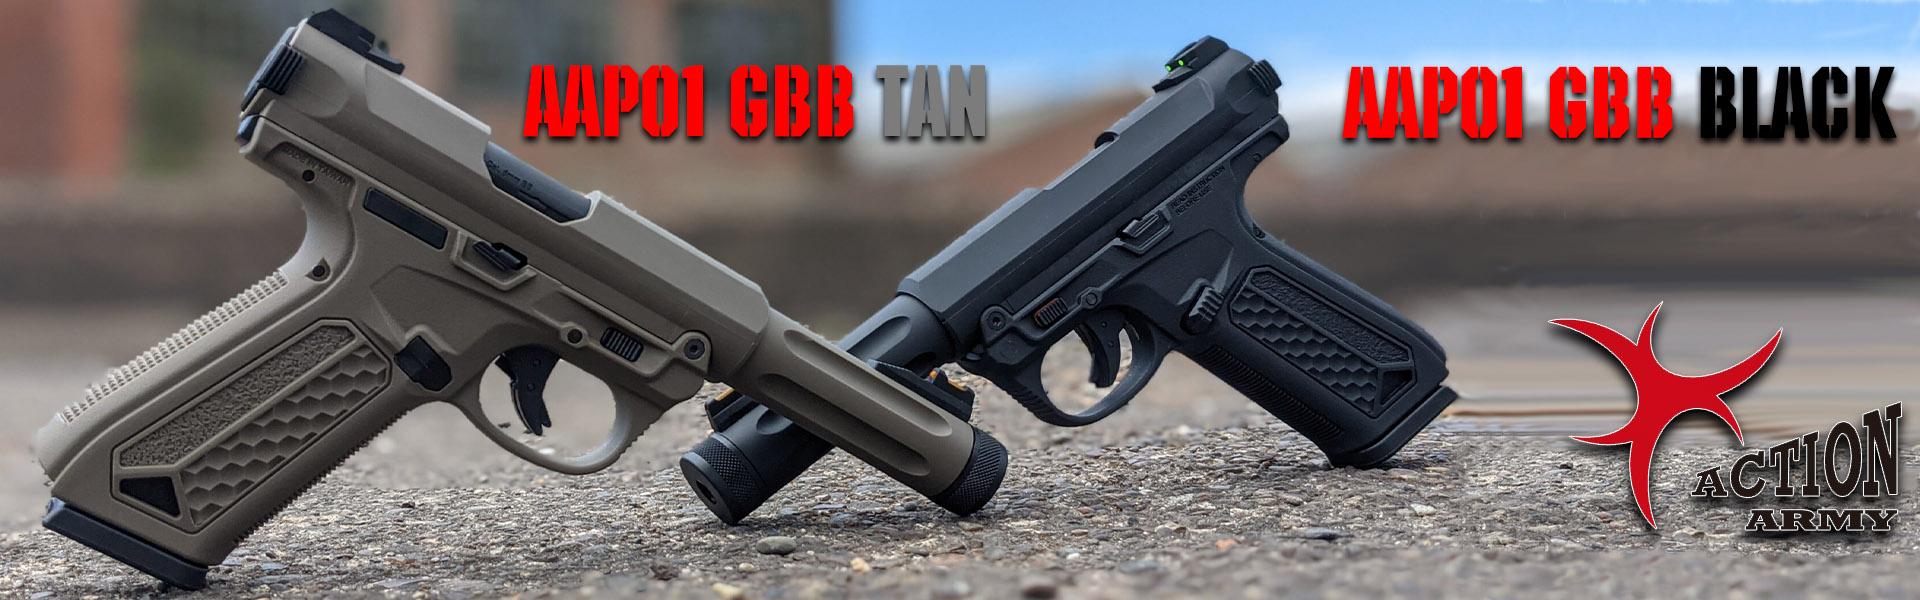 AAP01 assassin Pistol GBB Semi/Full Auto